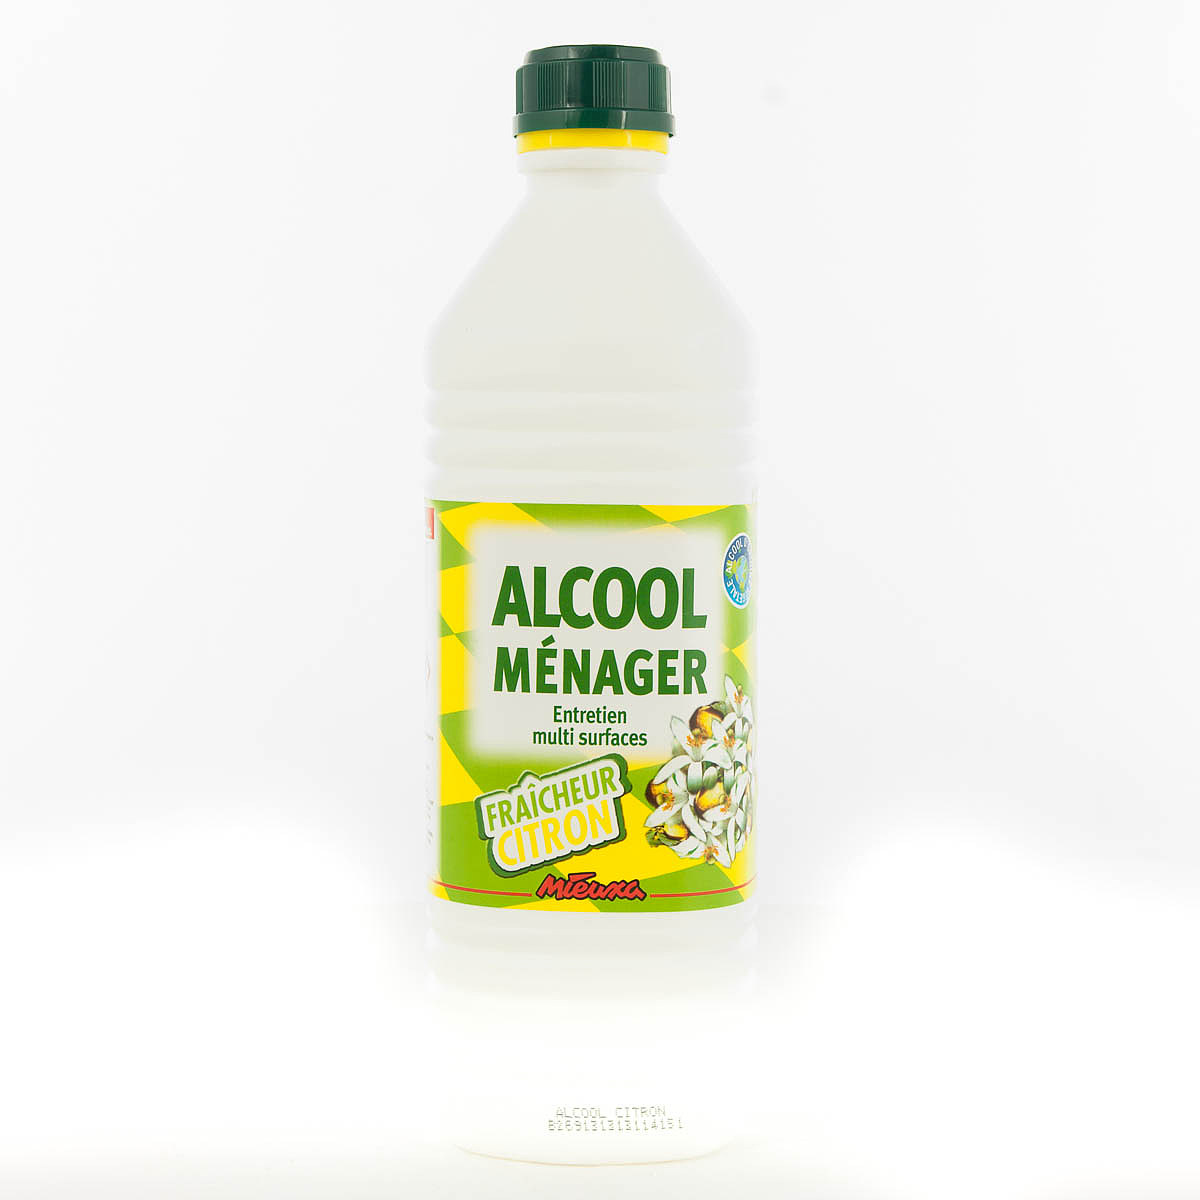 ALCOOL MENAGER CITRON 1L